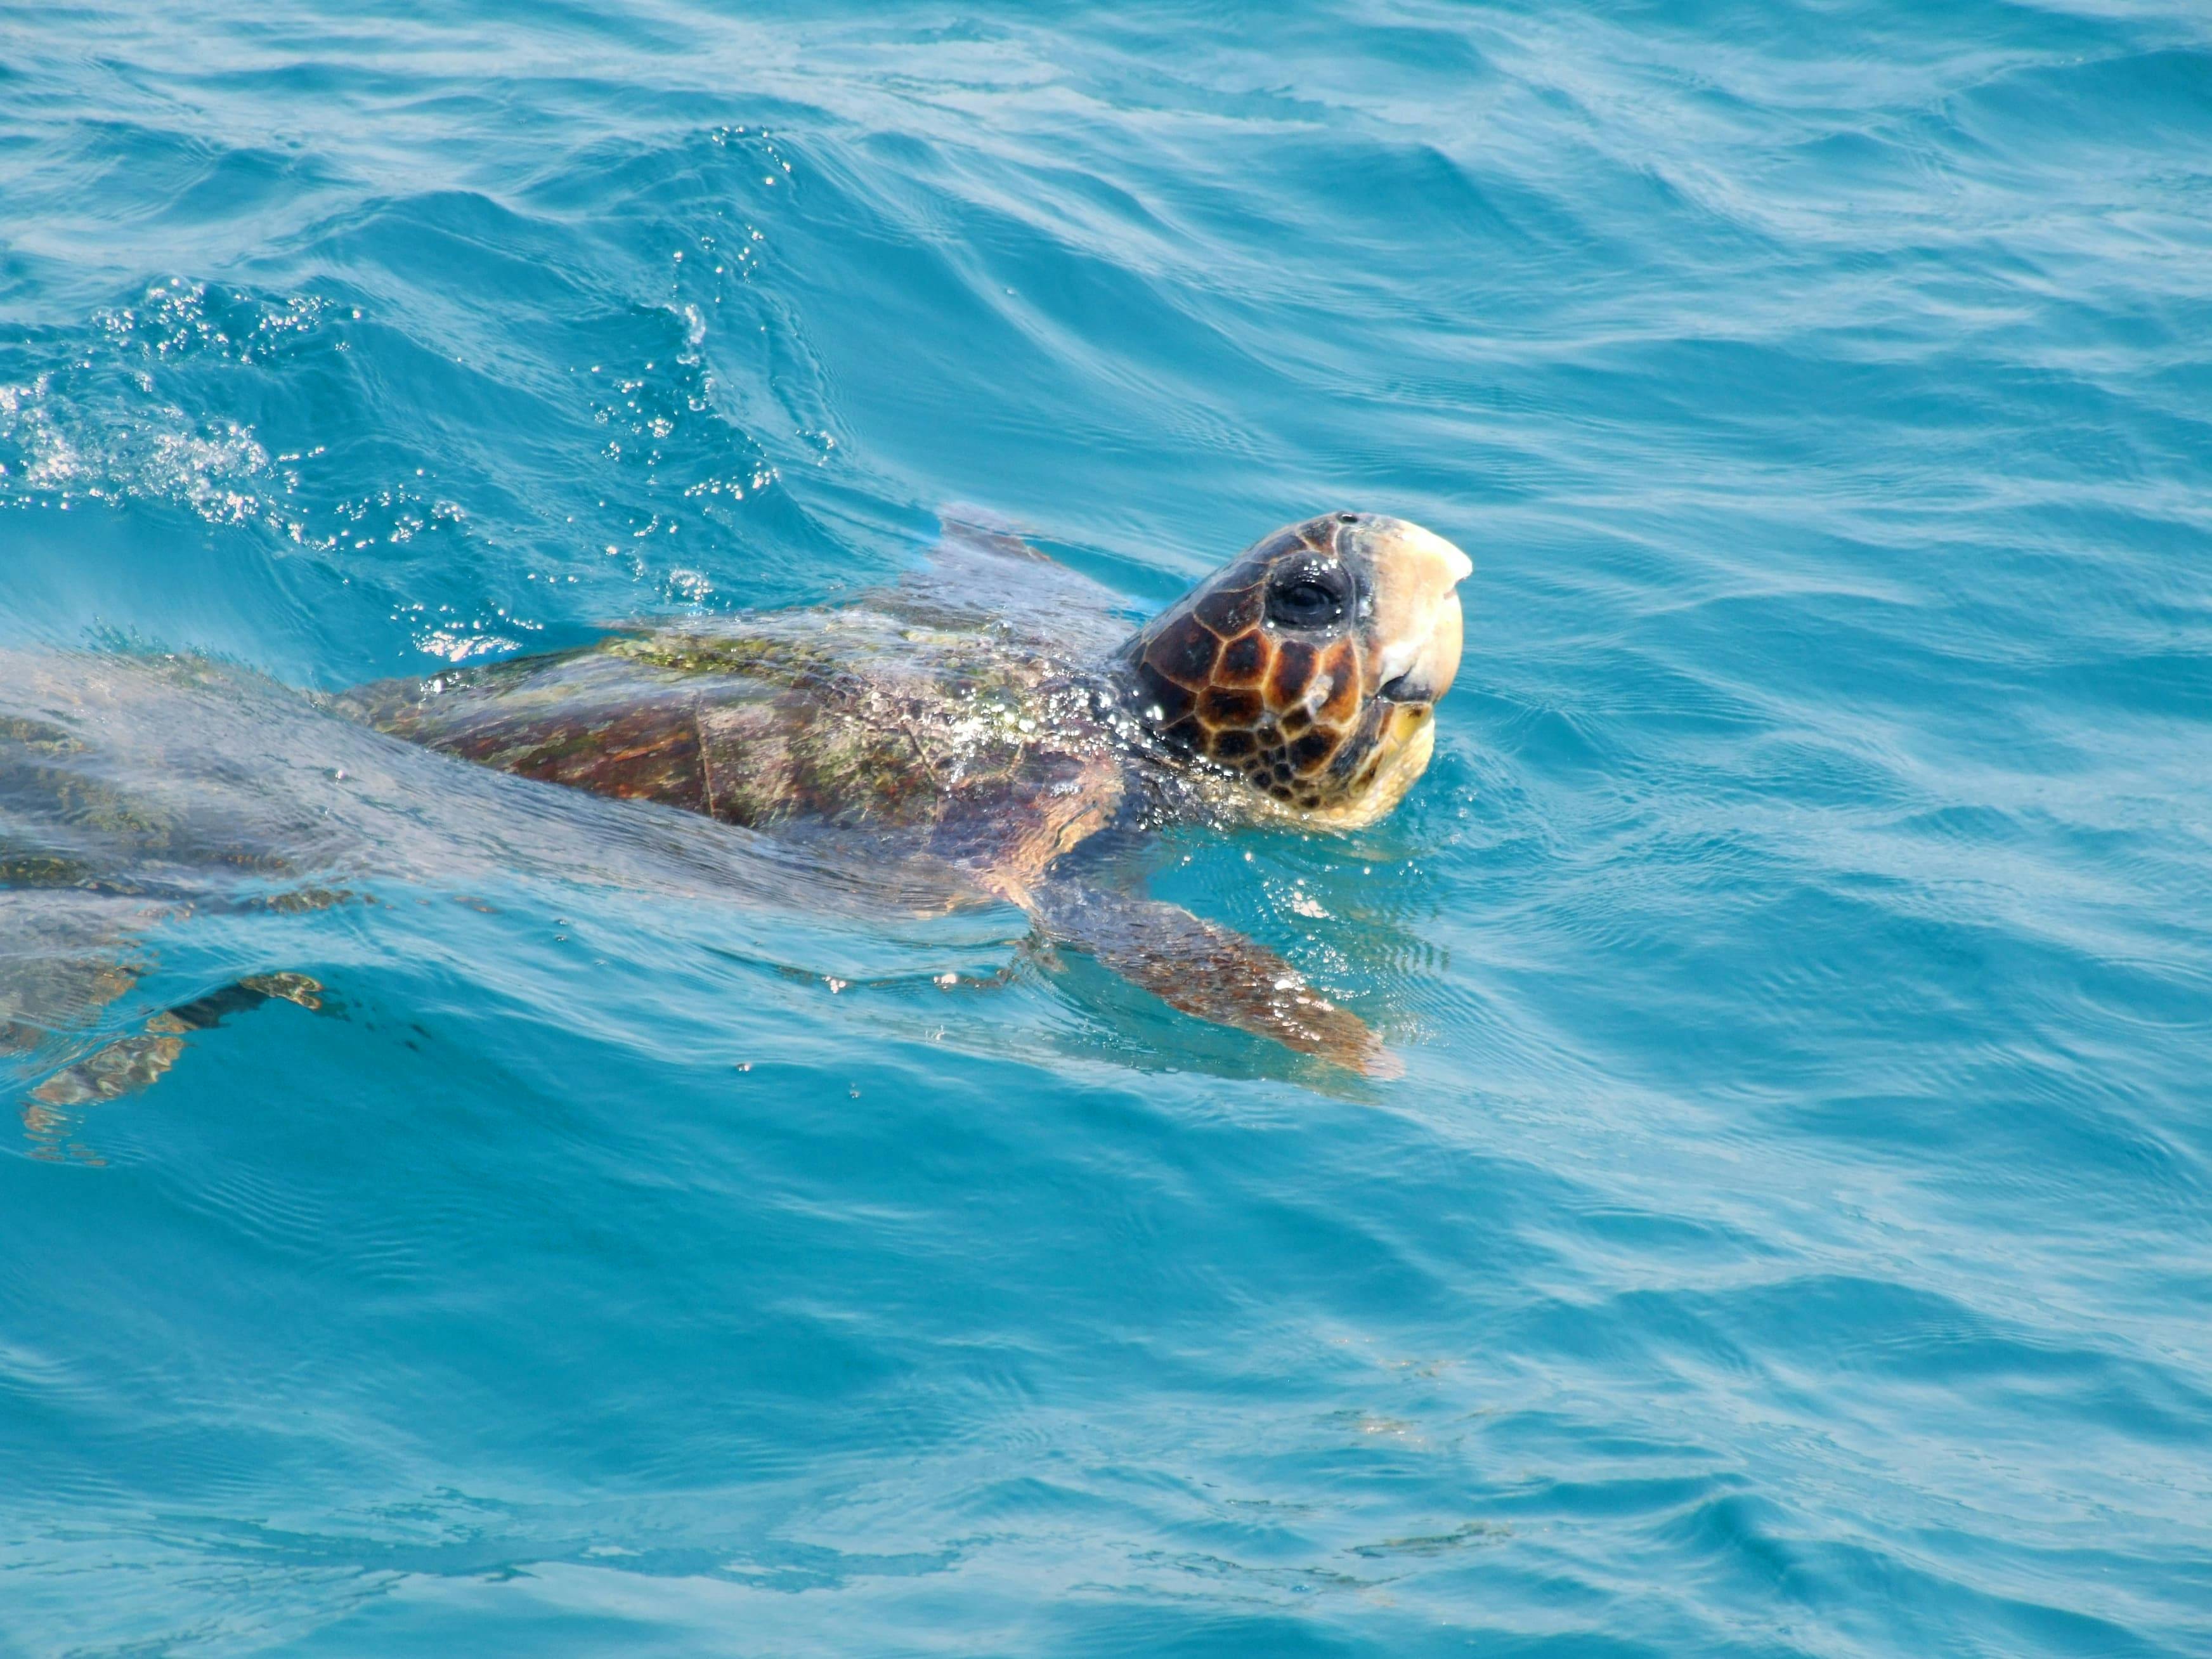 Turtle Island Cruise from Zante